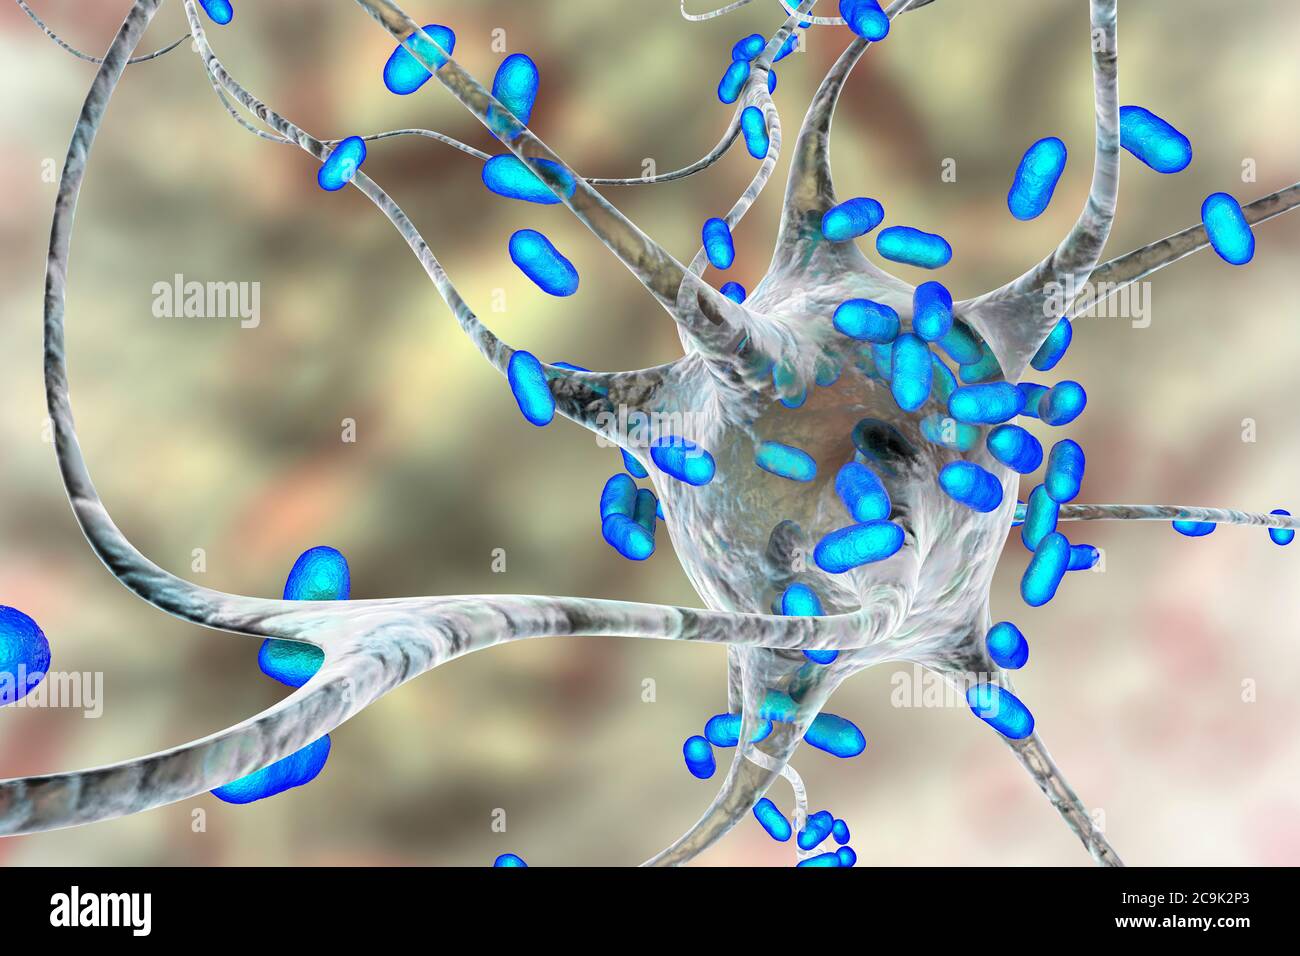 Bacterial encephalitis. Conceptual computer illustration showing bacteria infecting brain cells. Stock Photo